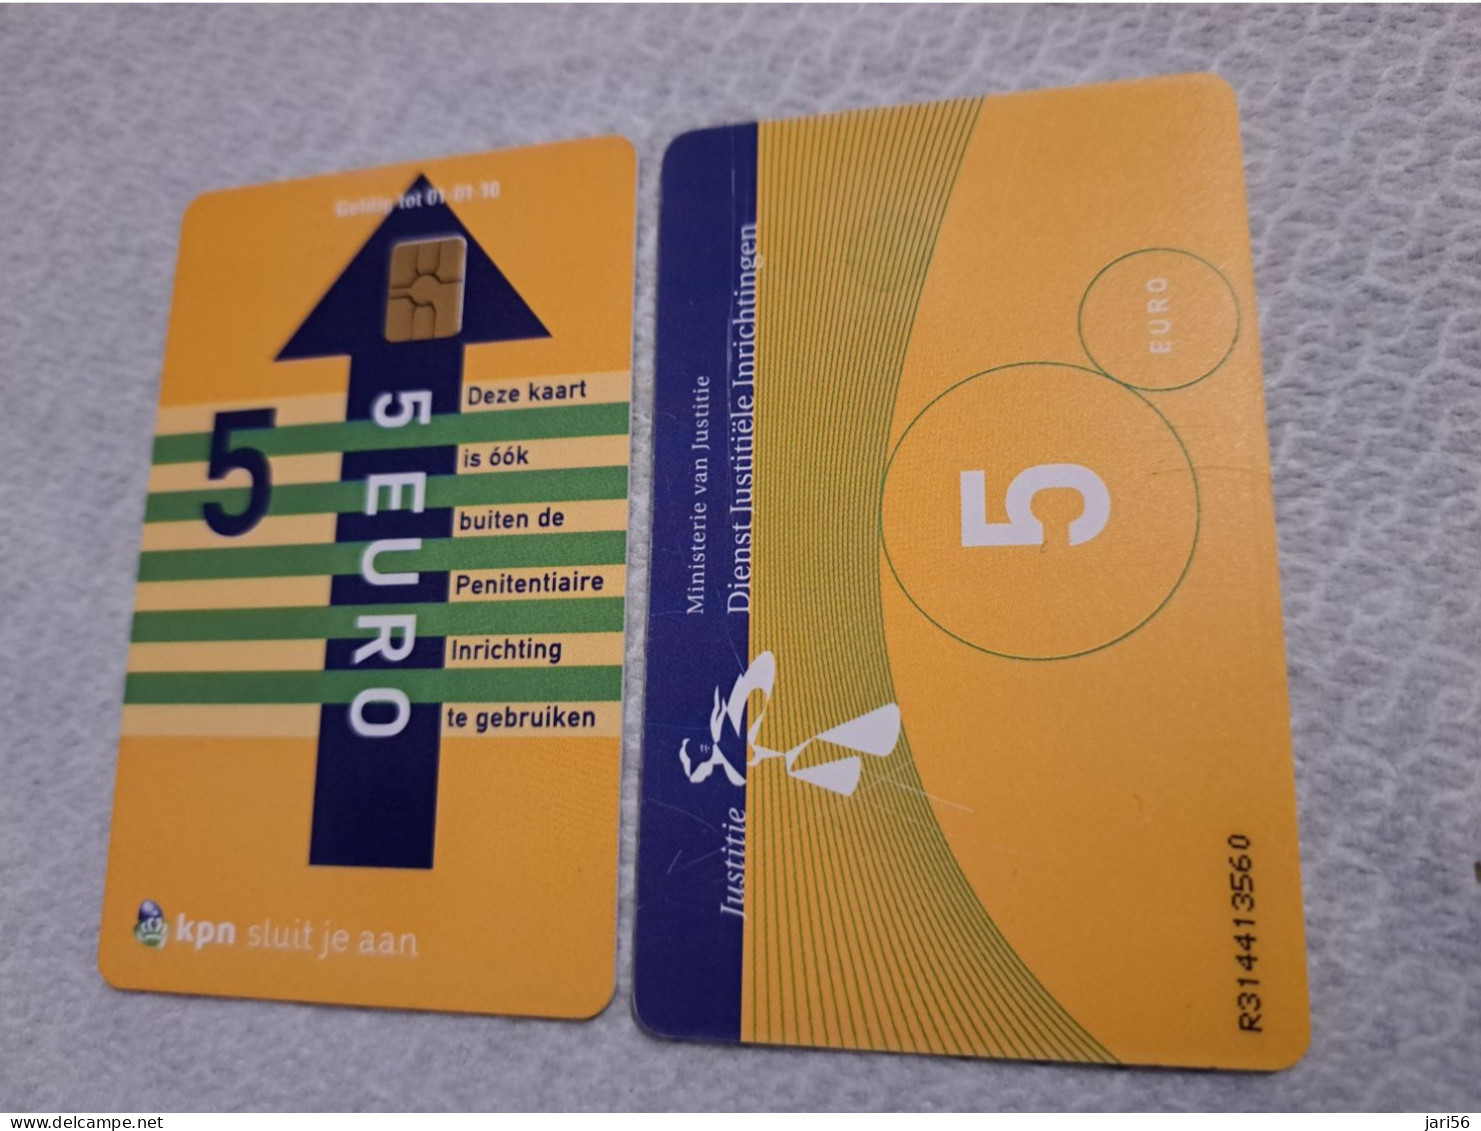 NETHERLANDS   € 5,-  ,-  / USED  / DATE  01-01-10  JUSTITIE/PRISON CARD  CHIP CARD/ USED   ** 16148** - [3] Tarjetas Móvil, Prepagadas Y Recargos